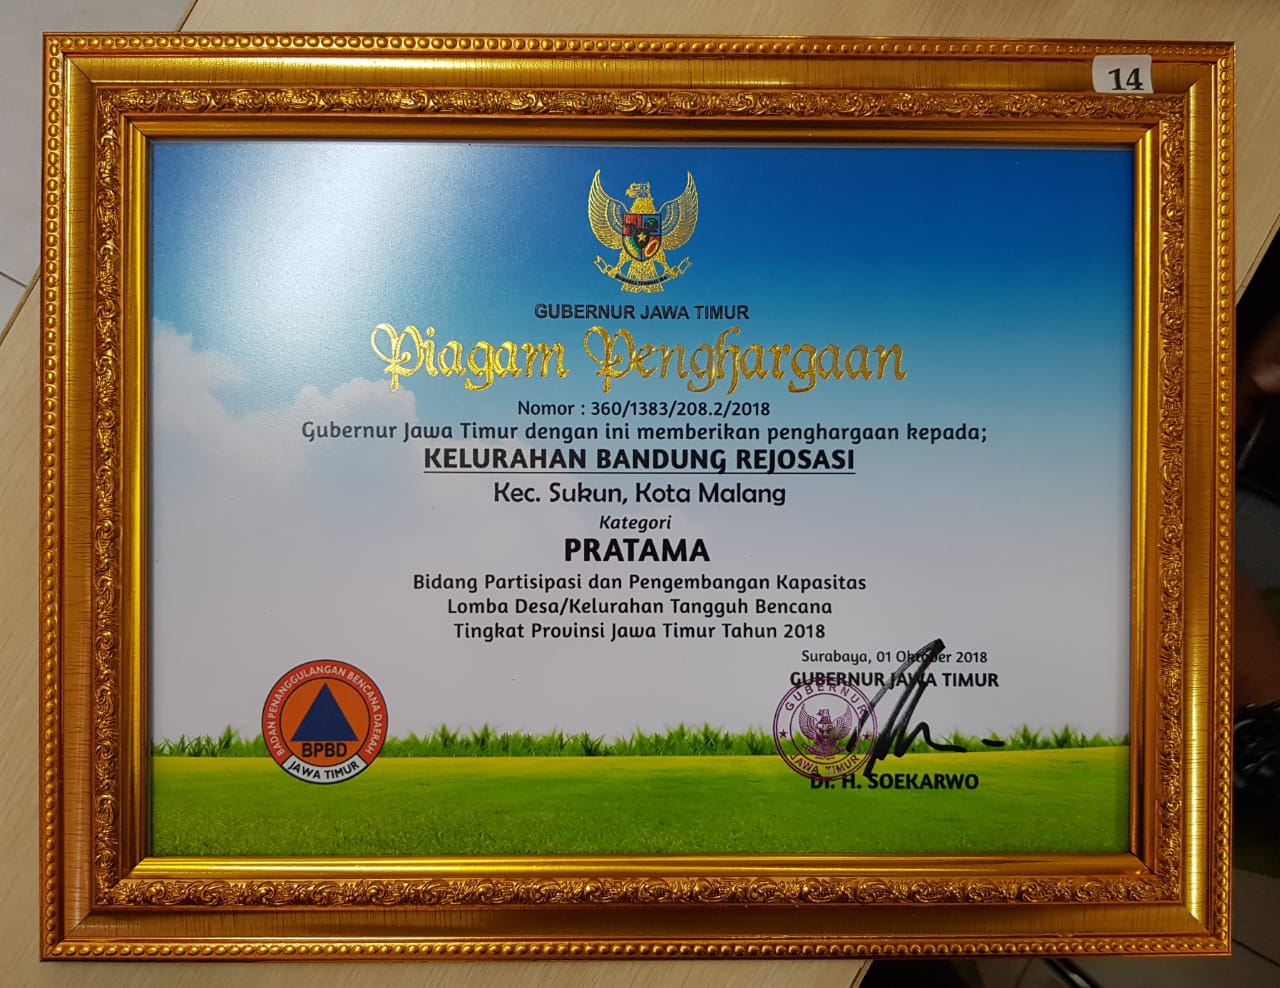 Piagam penghargaan Kelurahan Bandungrejosari sebagai Kelurahan Tangguh Bencana tingkat Pratama